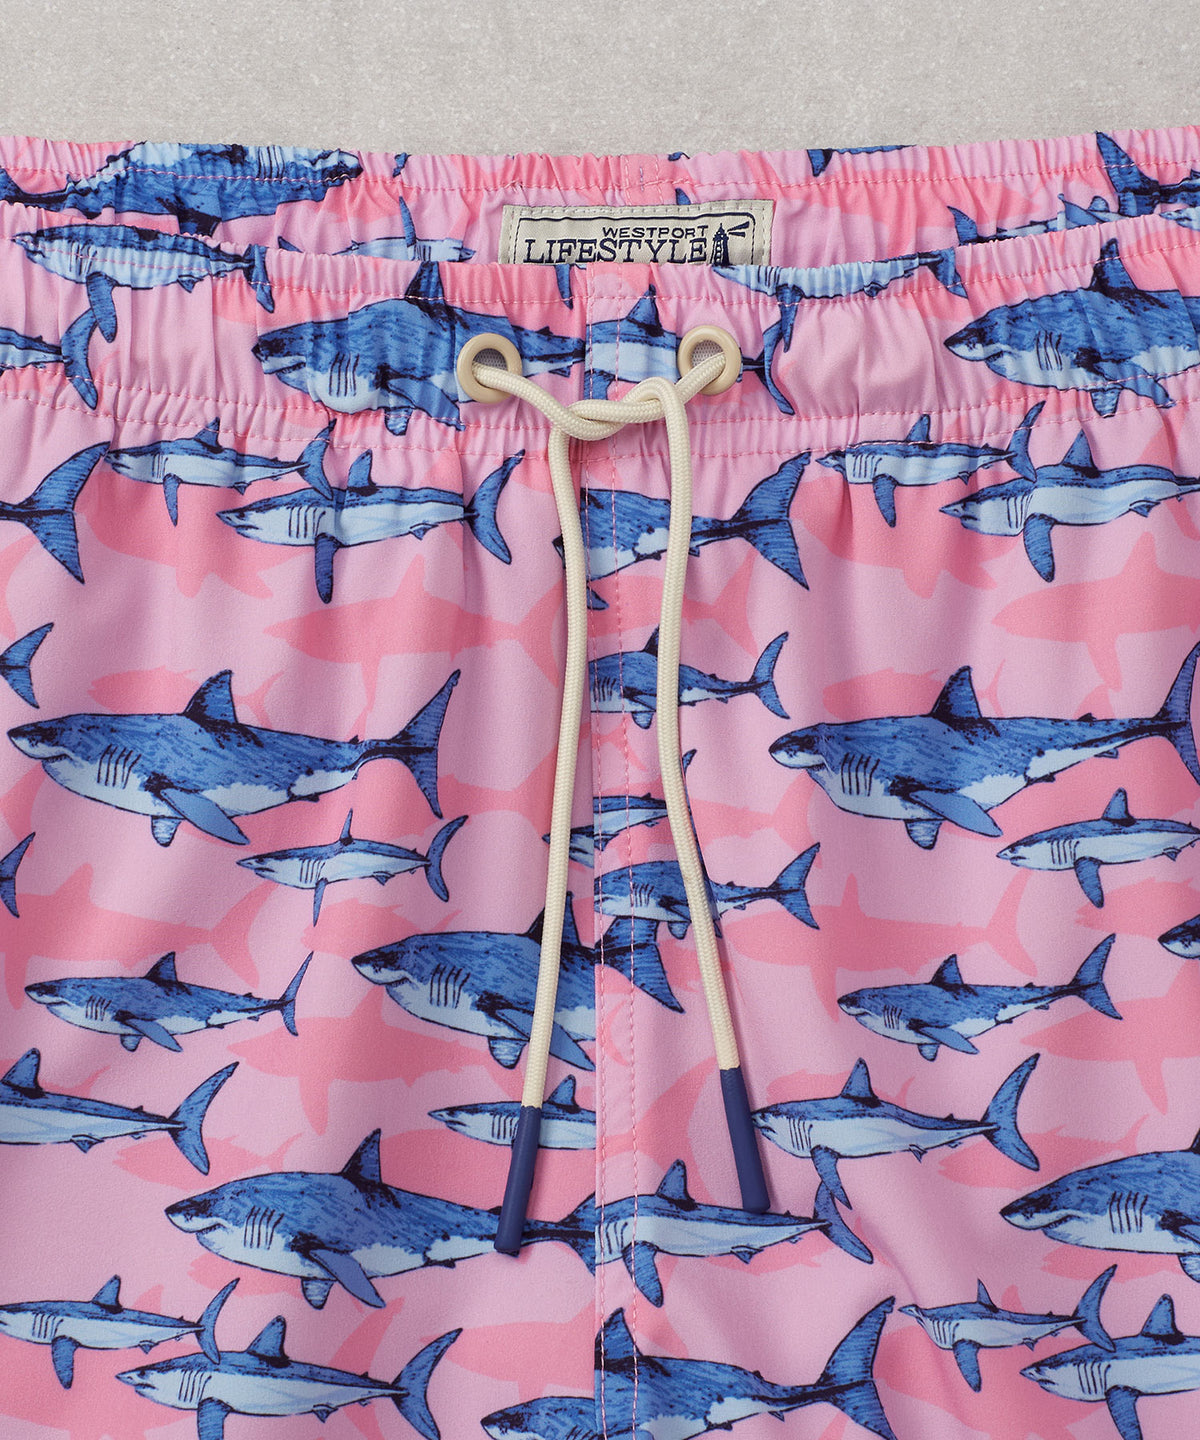 Westport Lifestyle Compo Shark Print Stretch Swim Trunk, Big & Tall